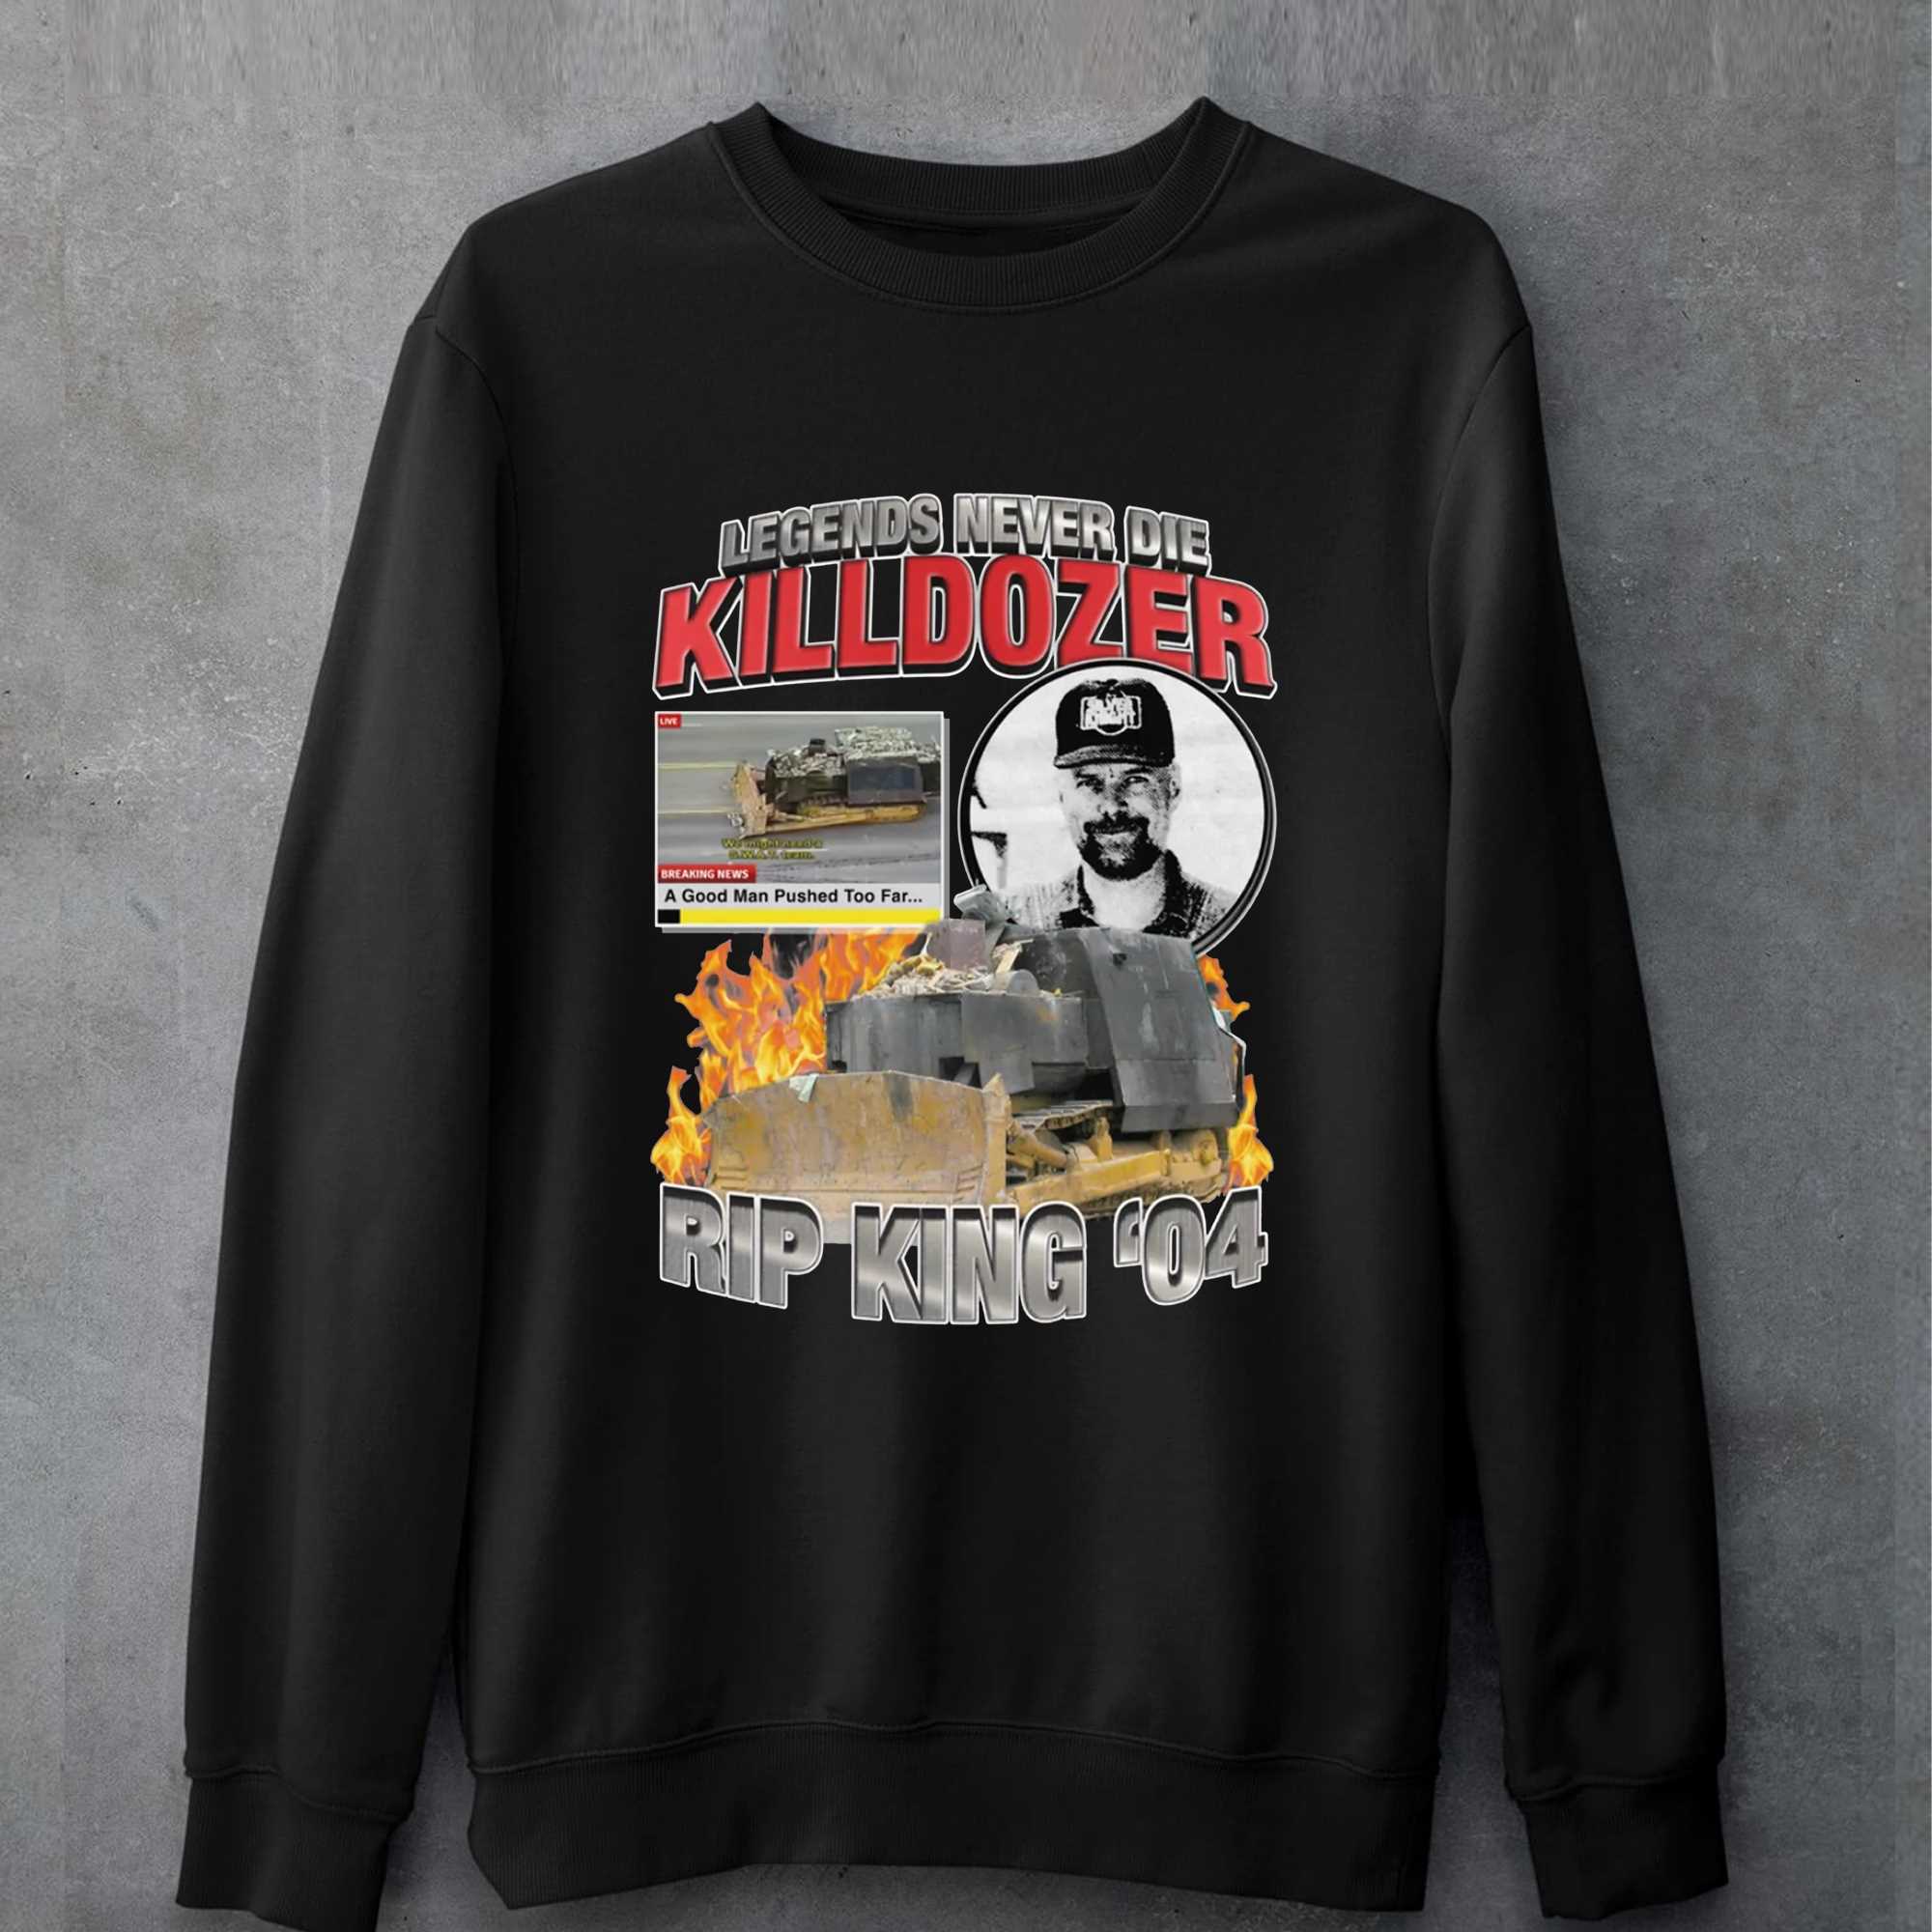 Legends Never Die Killdozer Rep King 04 T-shirt 